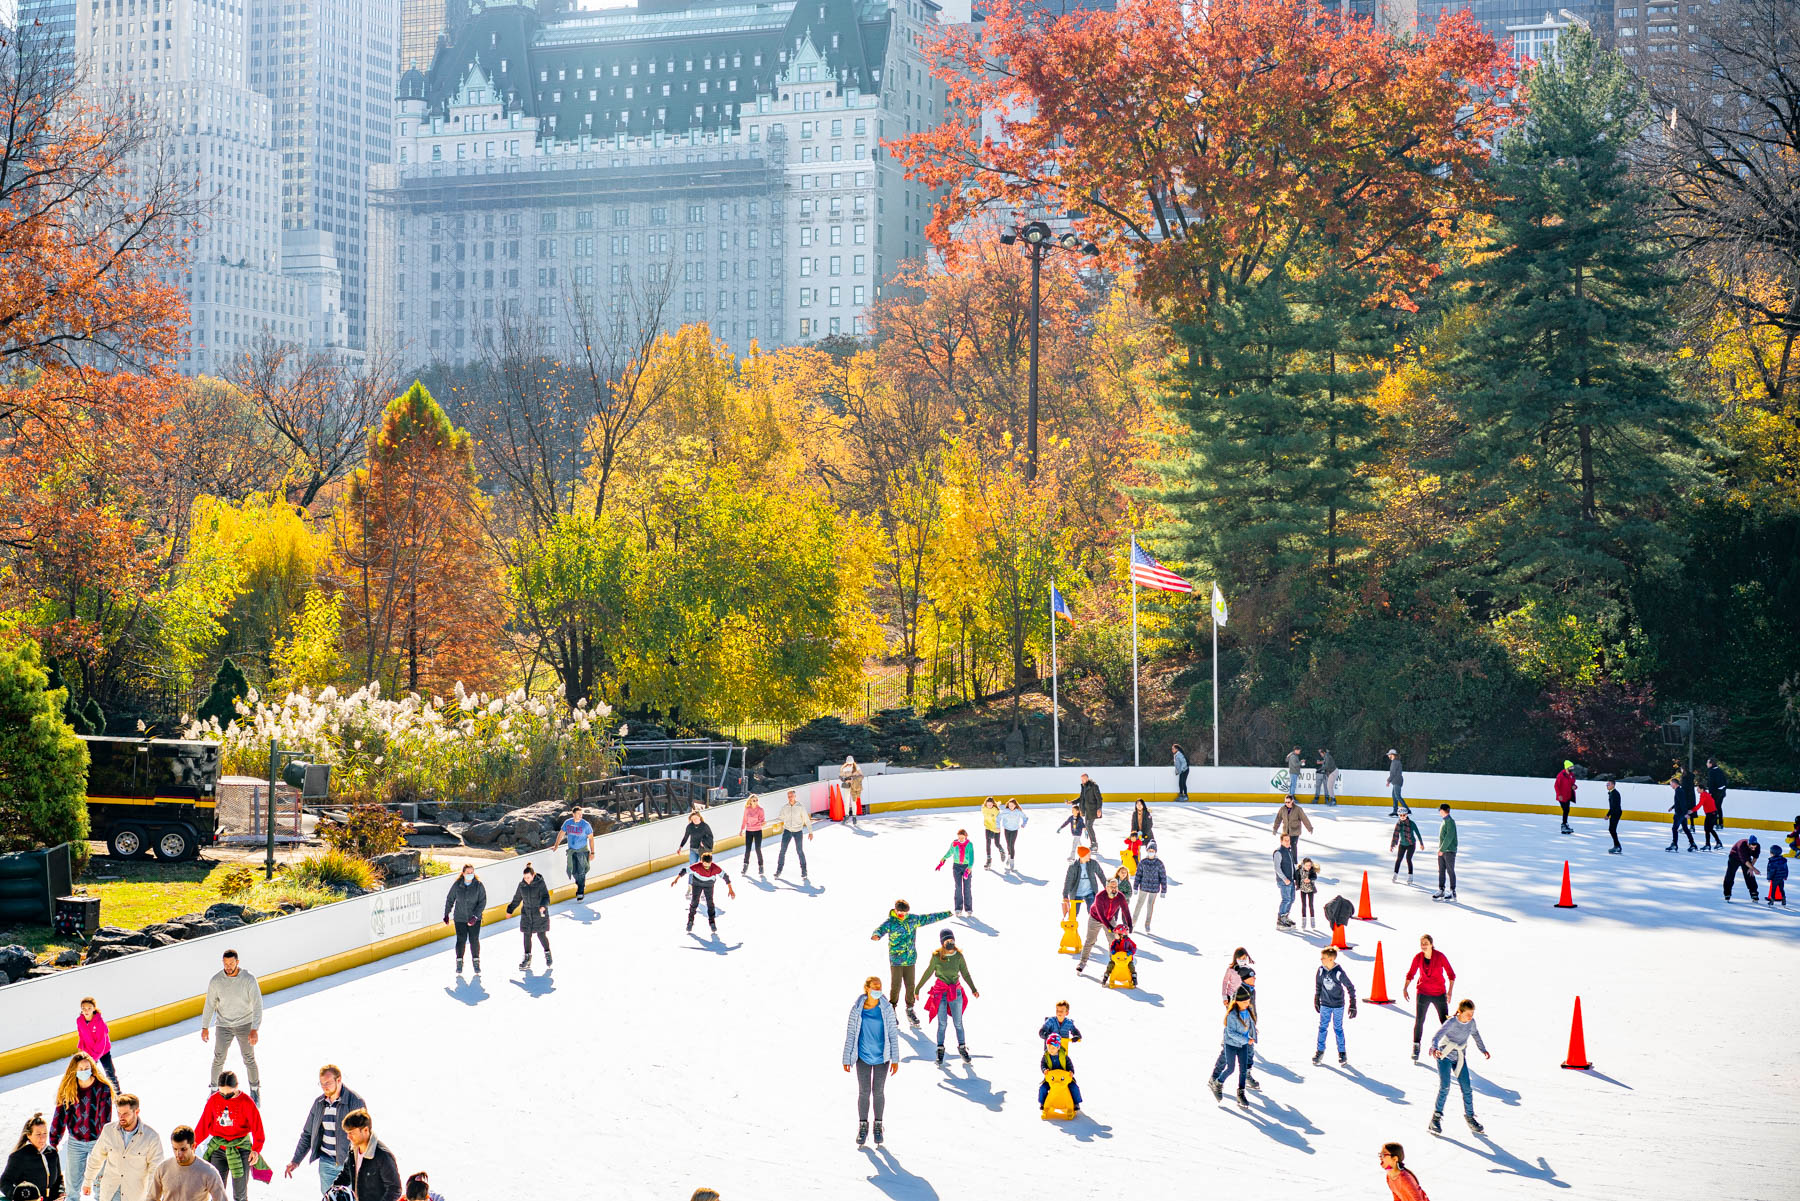 Best ice skating rinks New York City, when to visit New York City